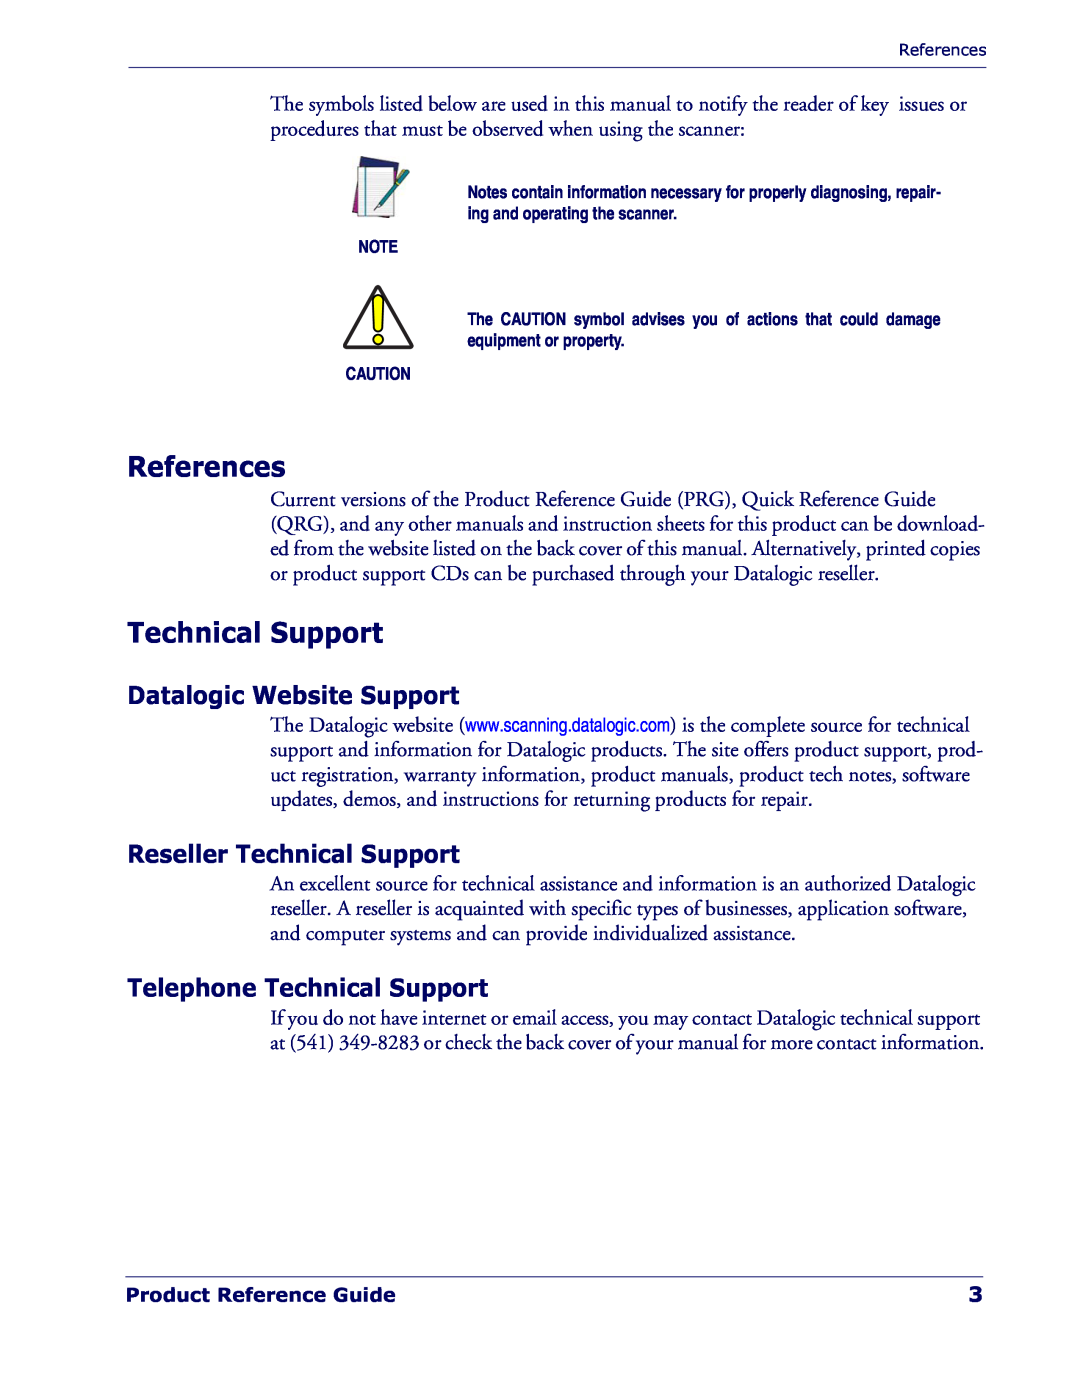 Datalogic Scanning QD 2300 manual References, Datalogic Website Support, Reseller Technical Support 